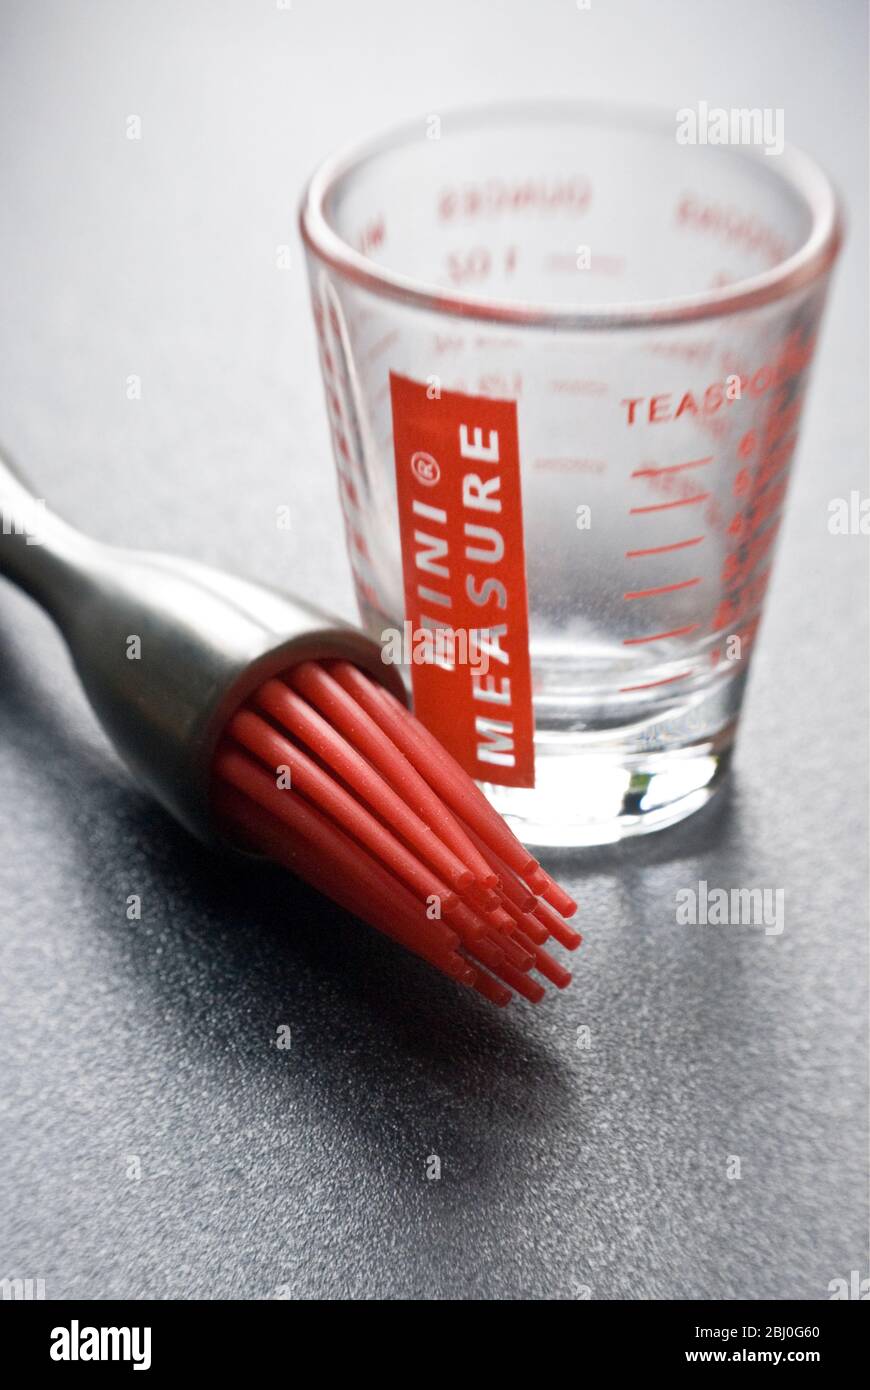 Cepillo de repostería moderno con "cerdas" de silicona roja con un poco de cristal de medición sobre una superficie texturizada oscura - Foto de stock